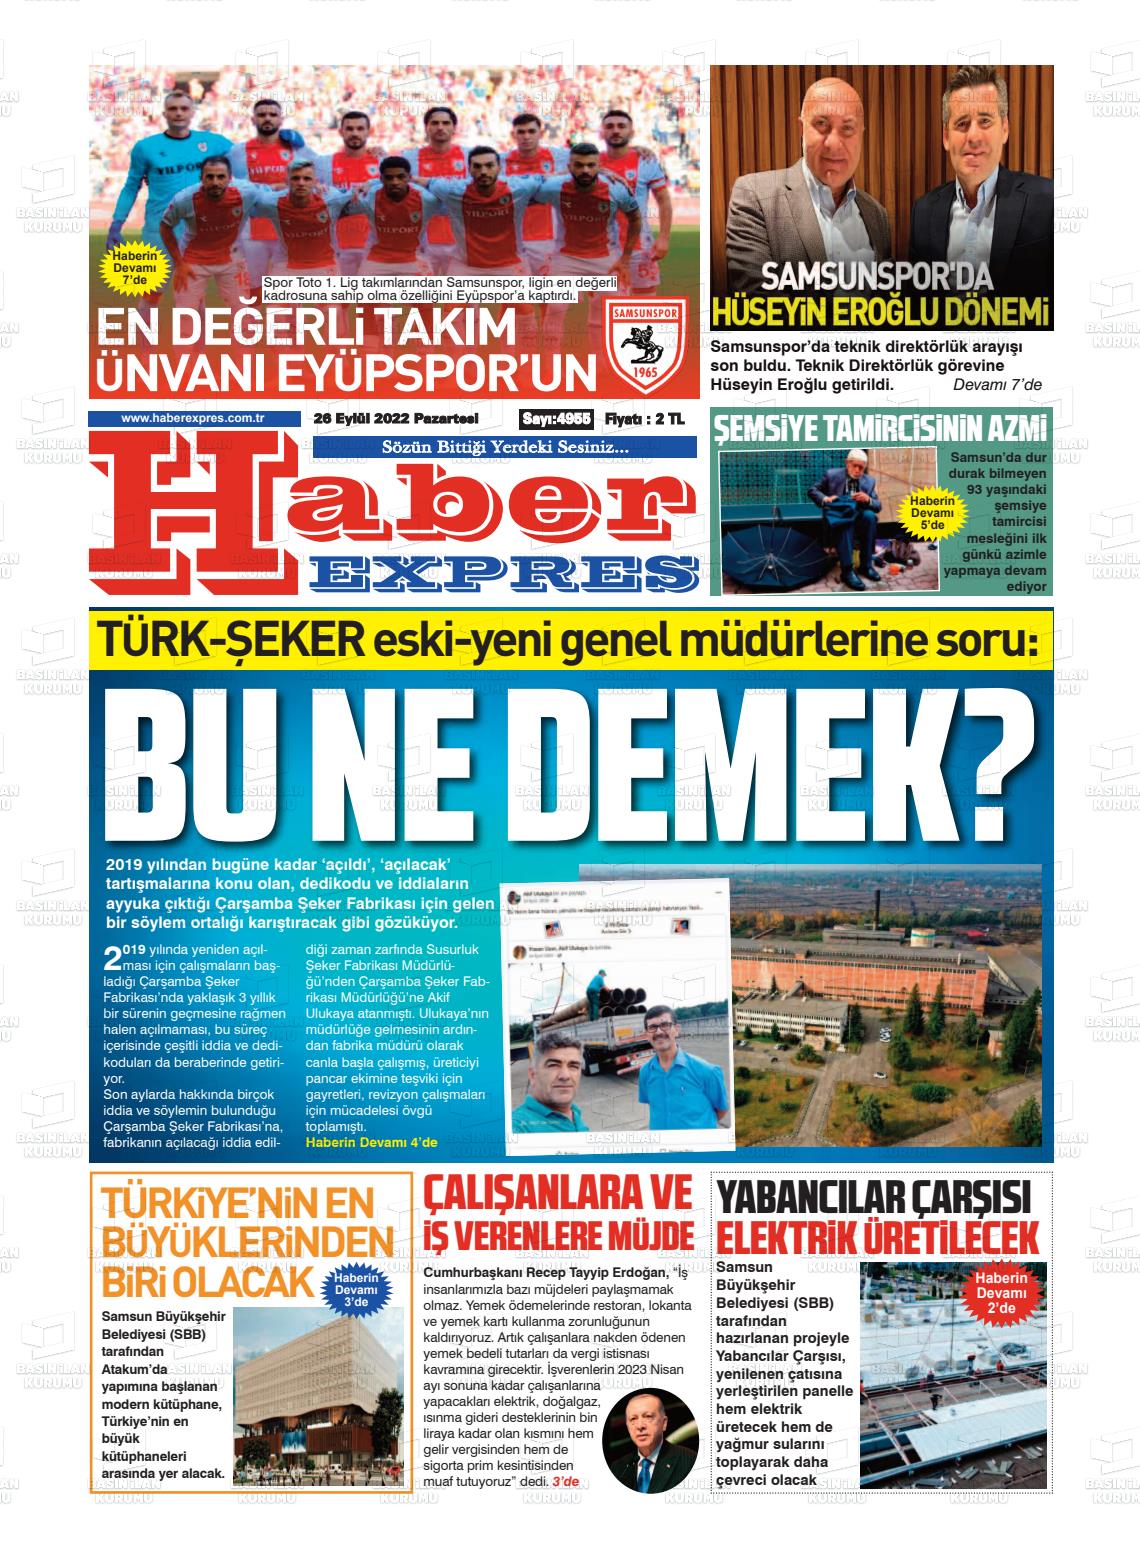 26 Eylül 2022 Haber Expres Gazete Manşeti